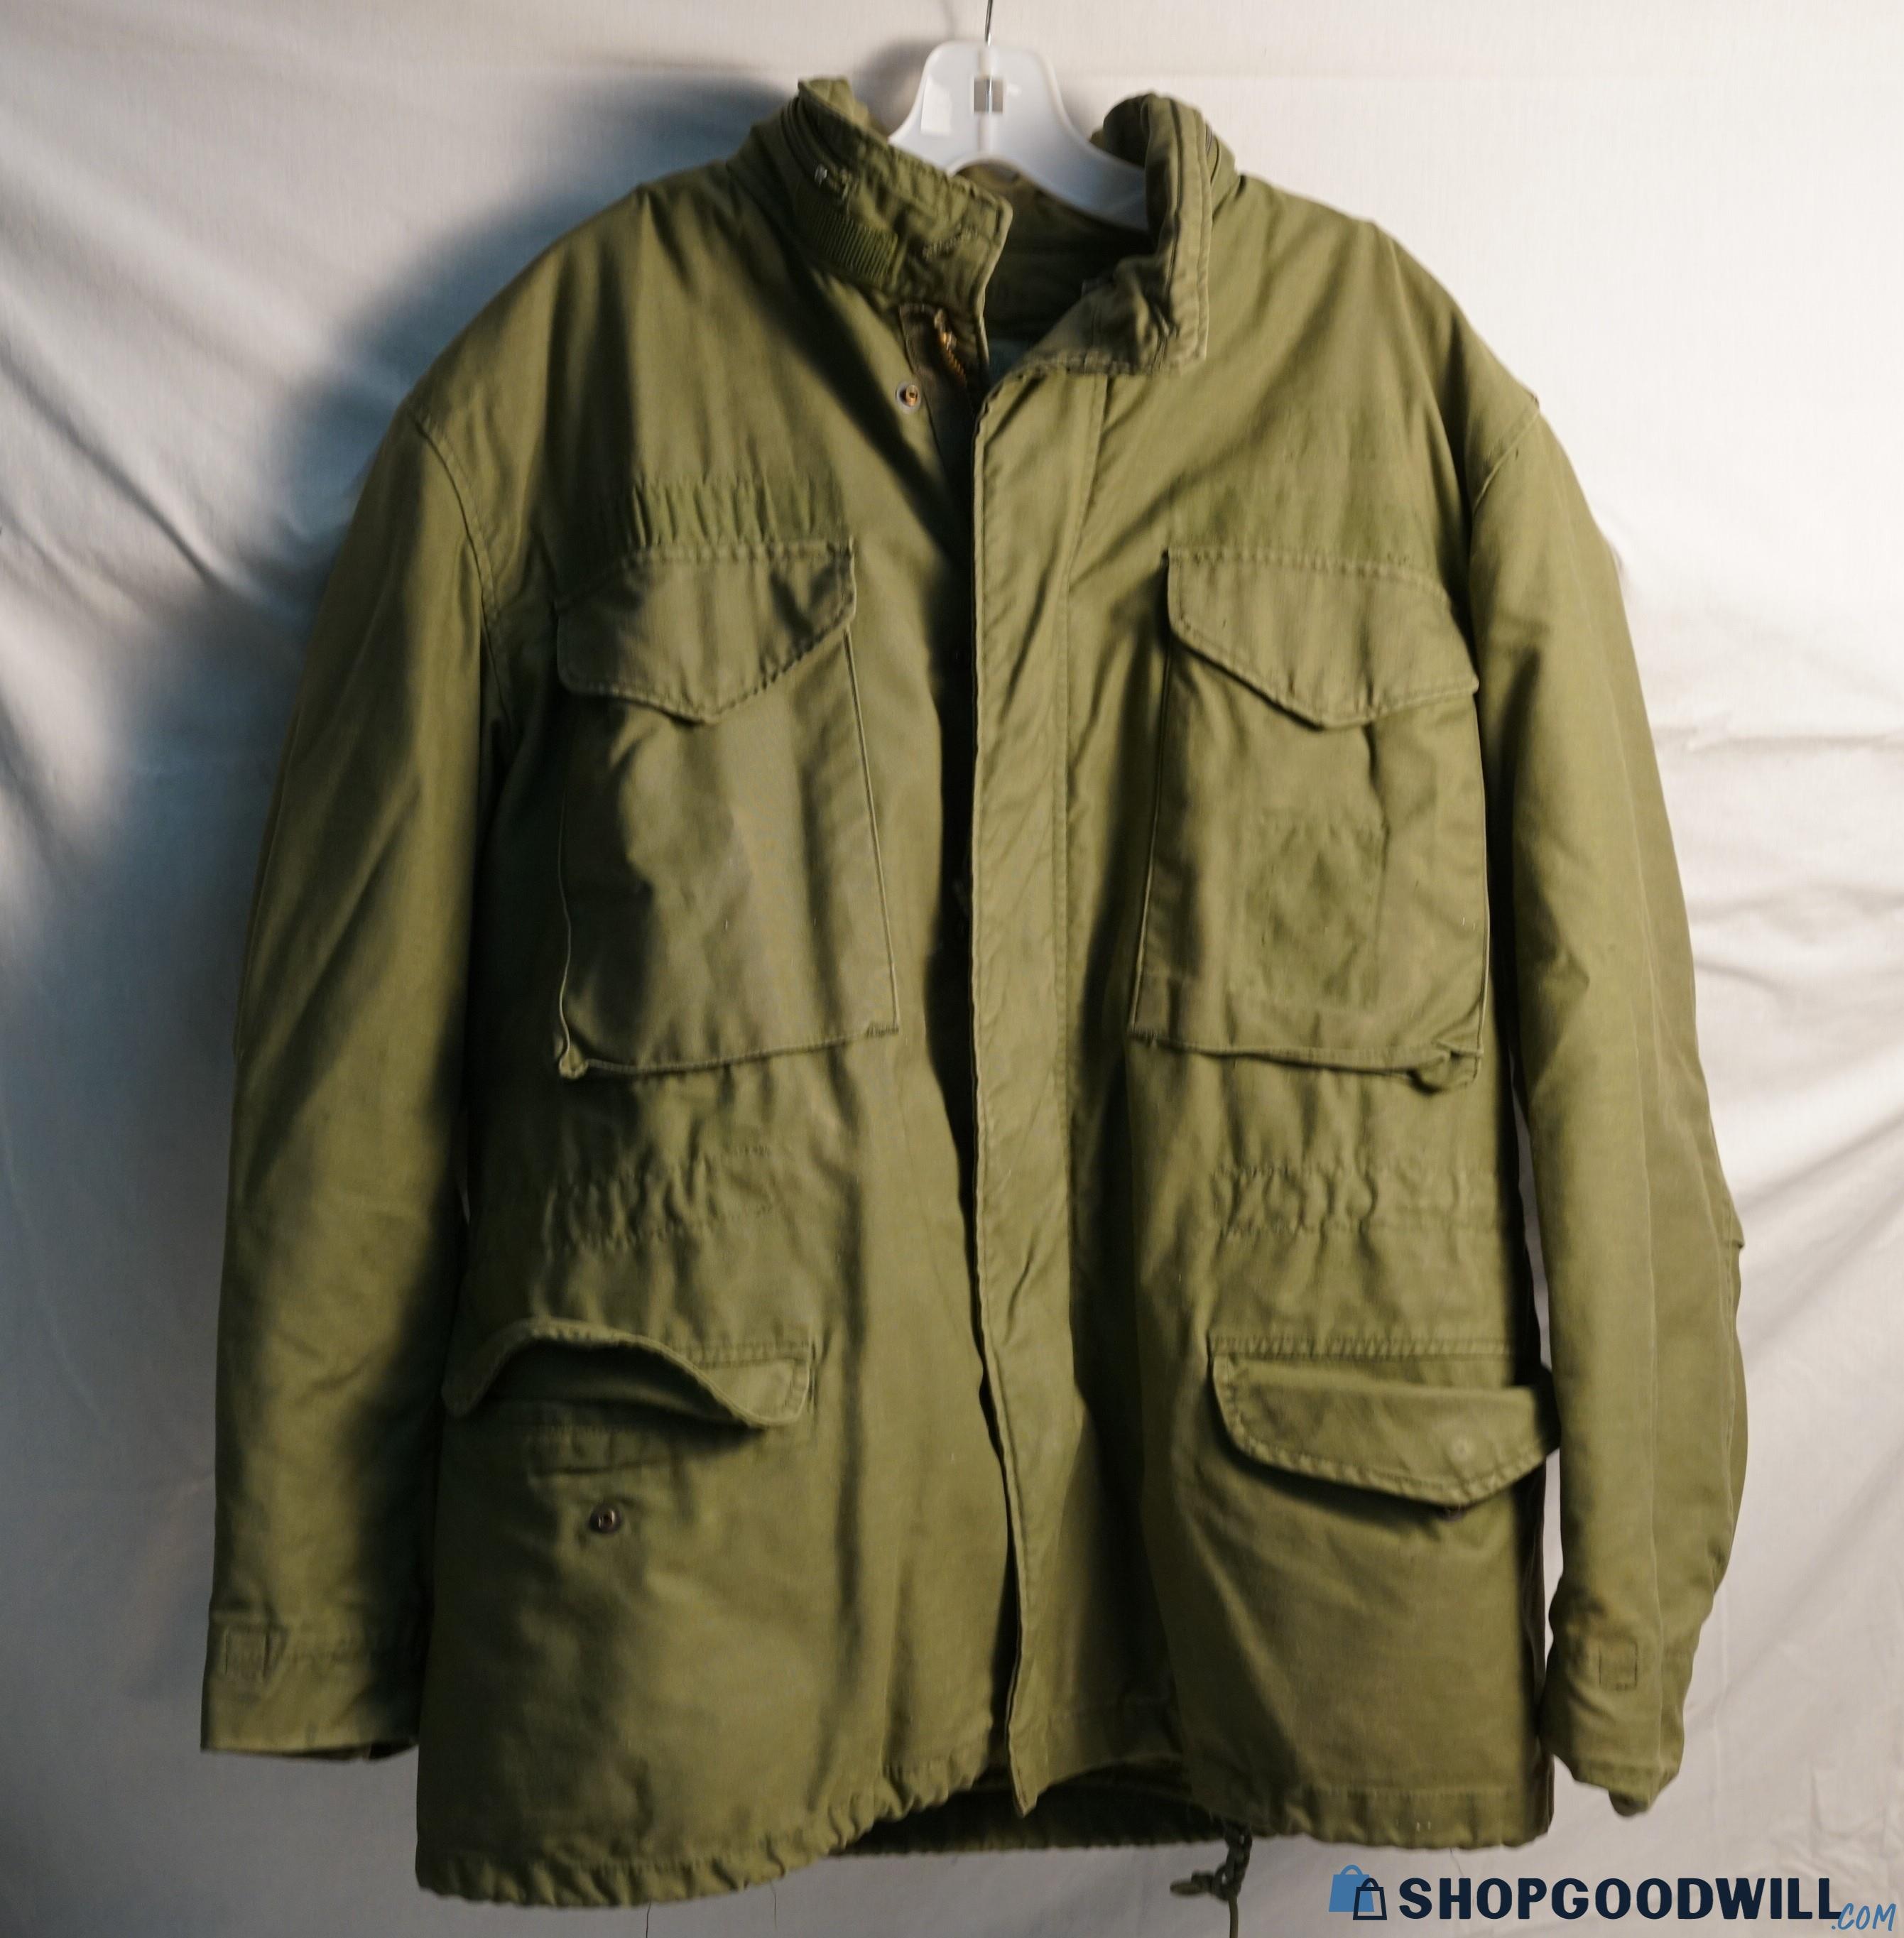 Field Military Jacket - Size M - shopgoodwill.com